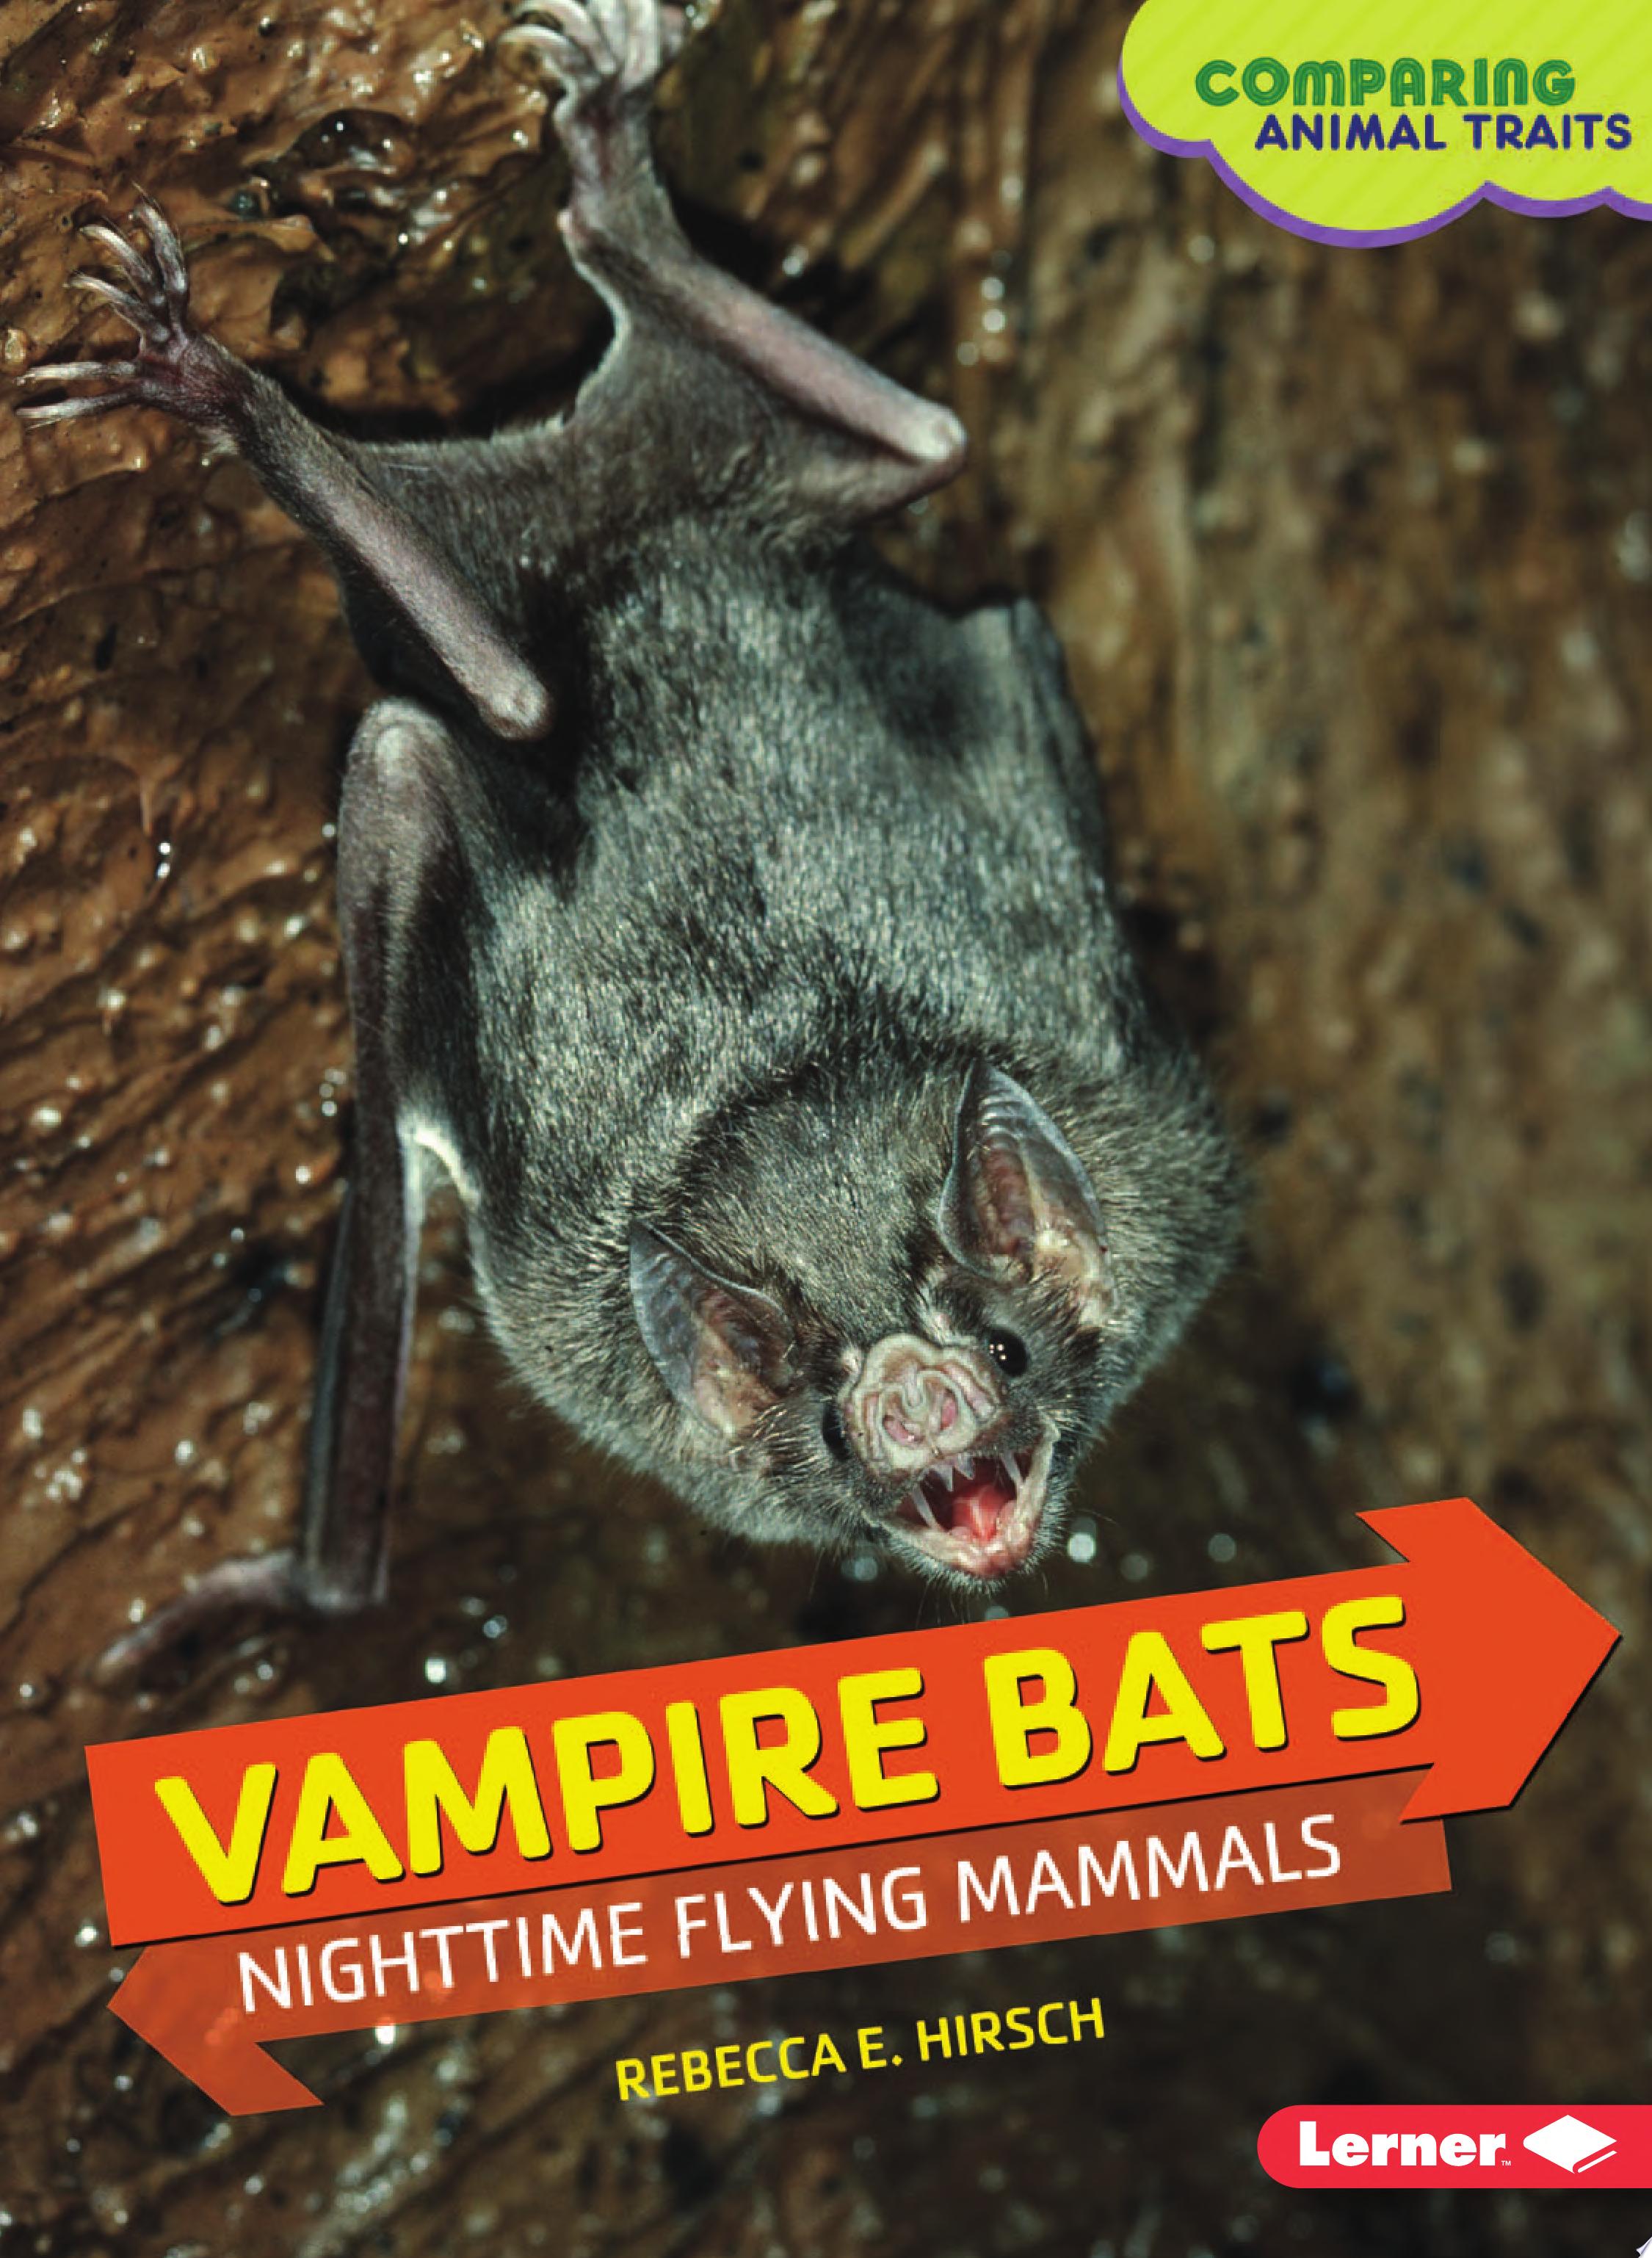 Image for "Vampire Bats"